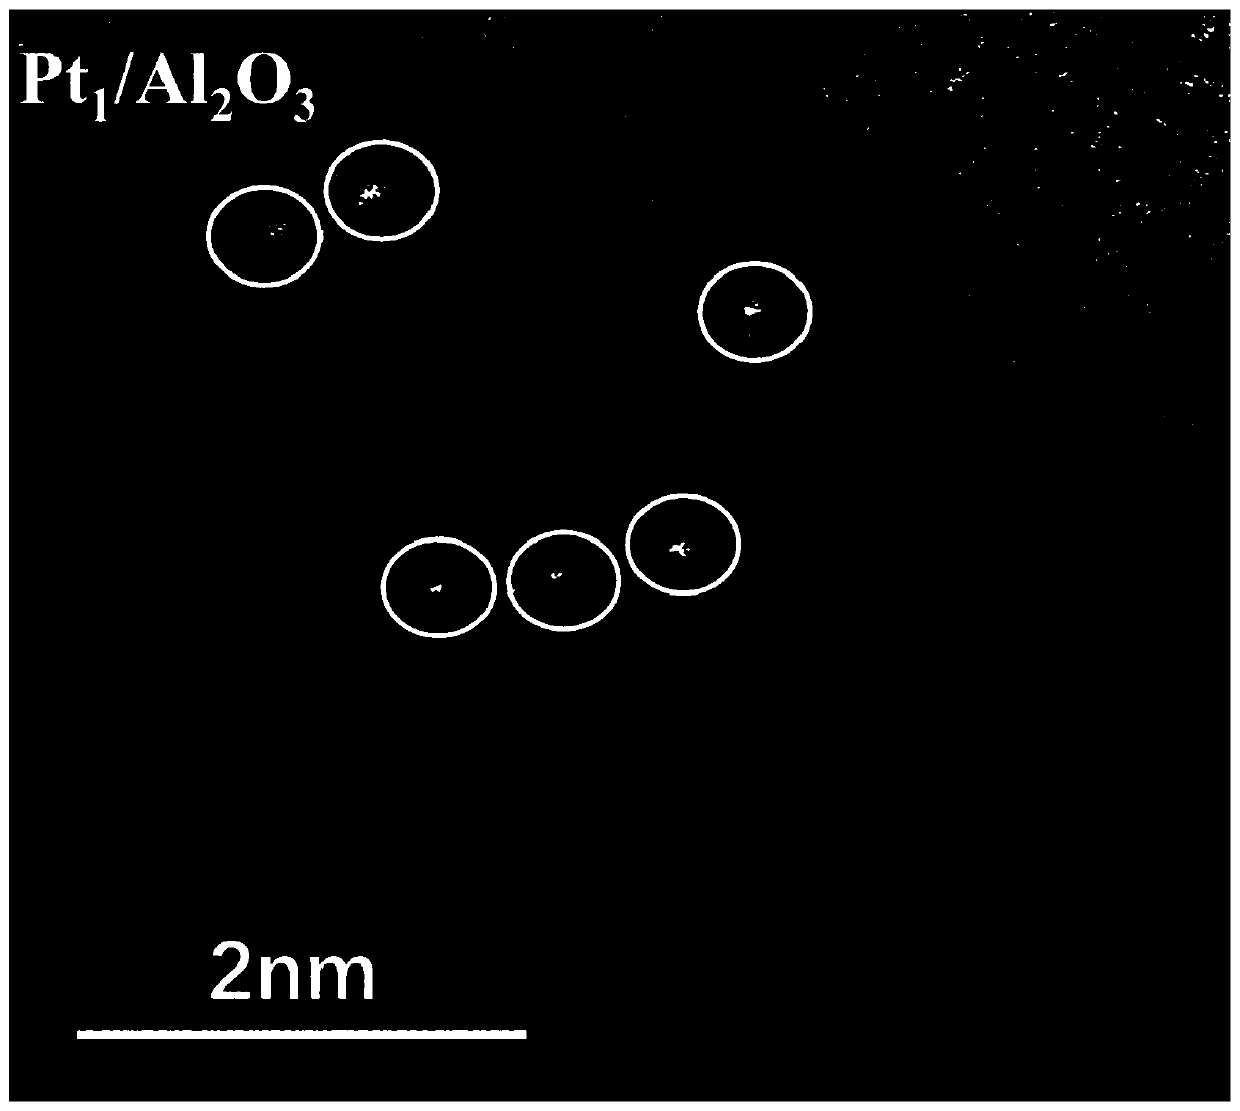 Method for preparing monatomic catalyst by atomizing precursor